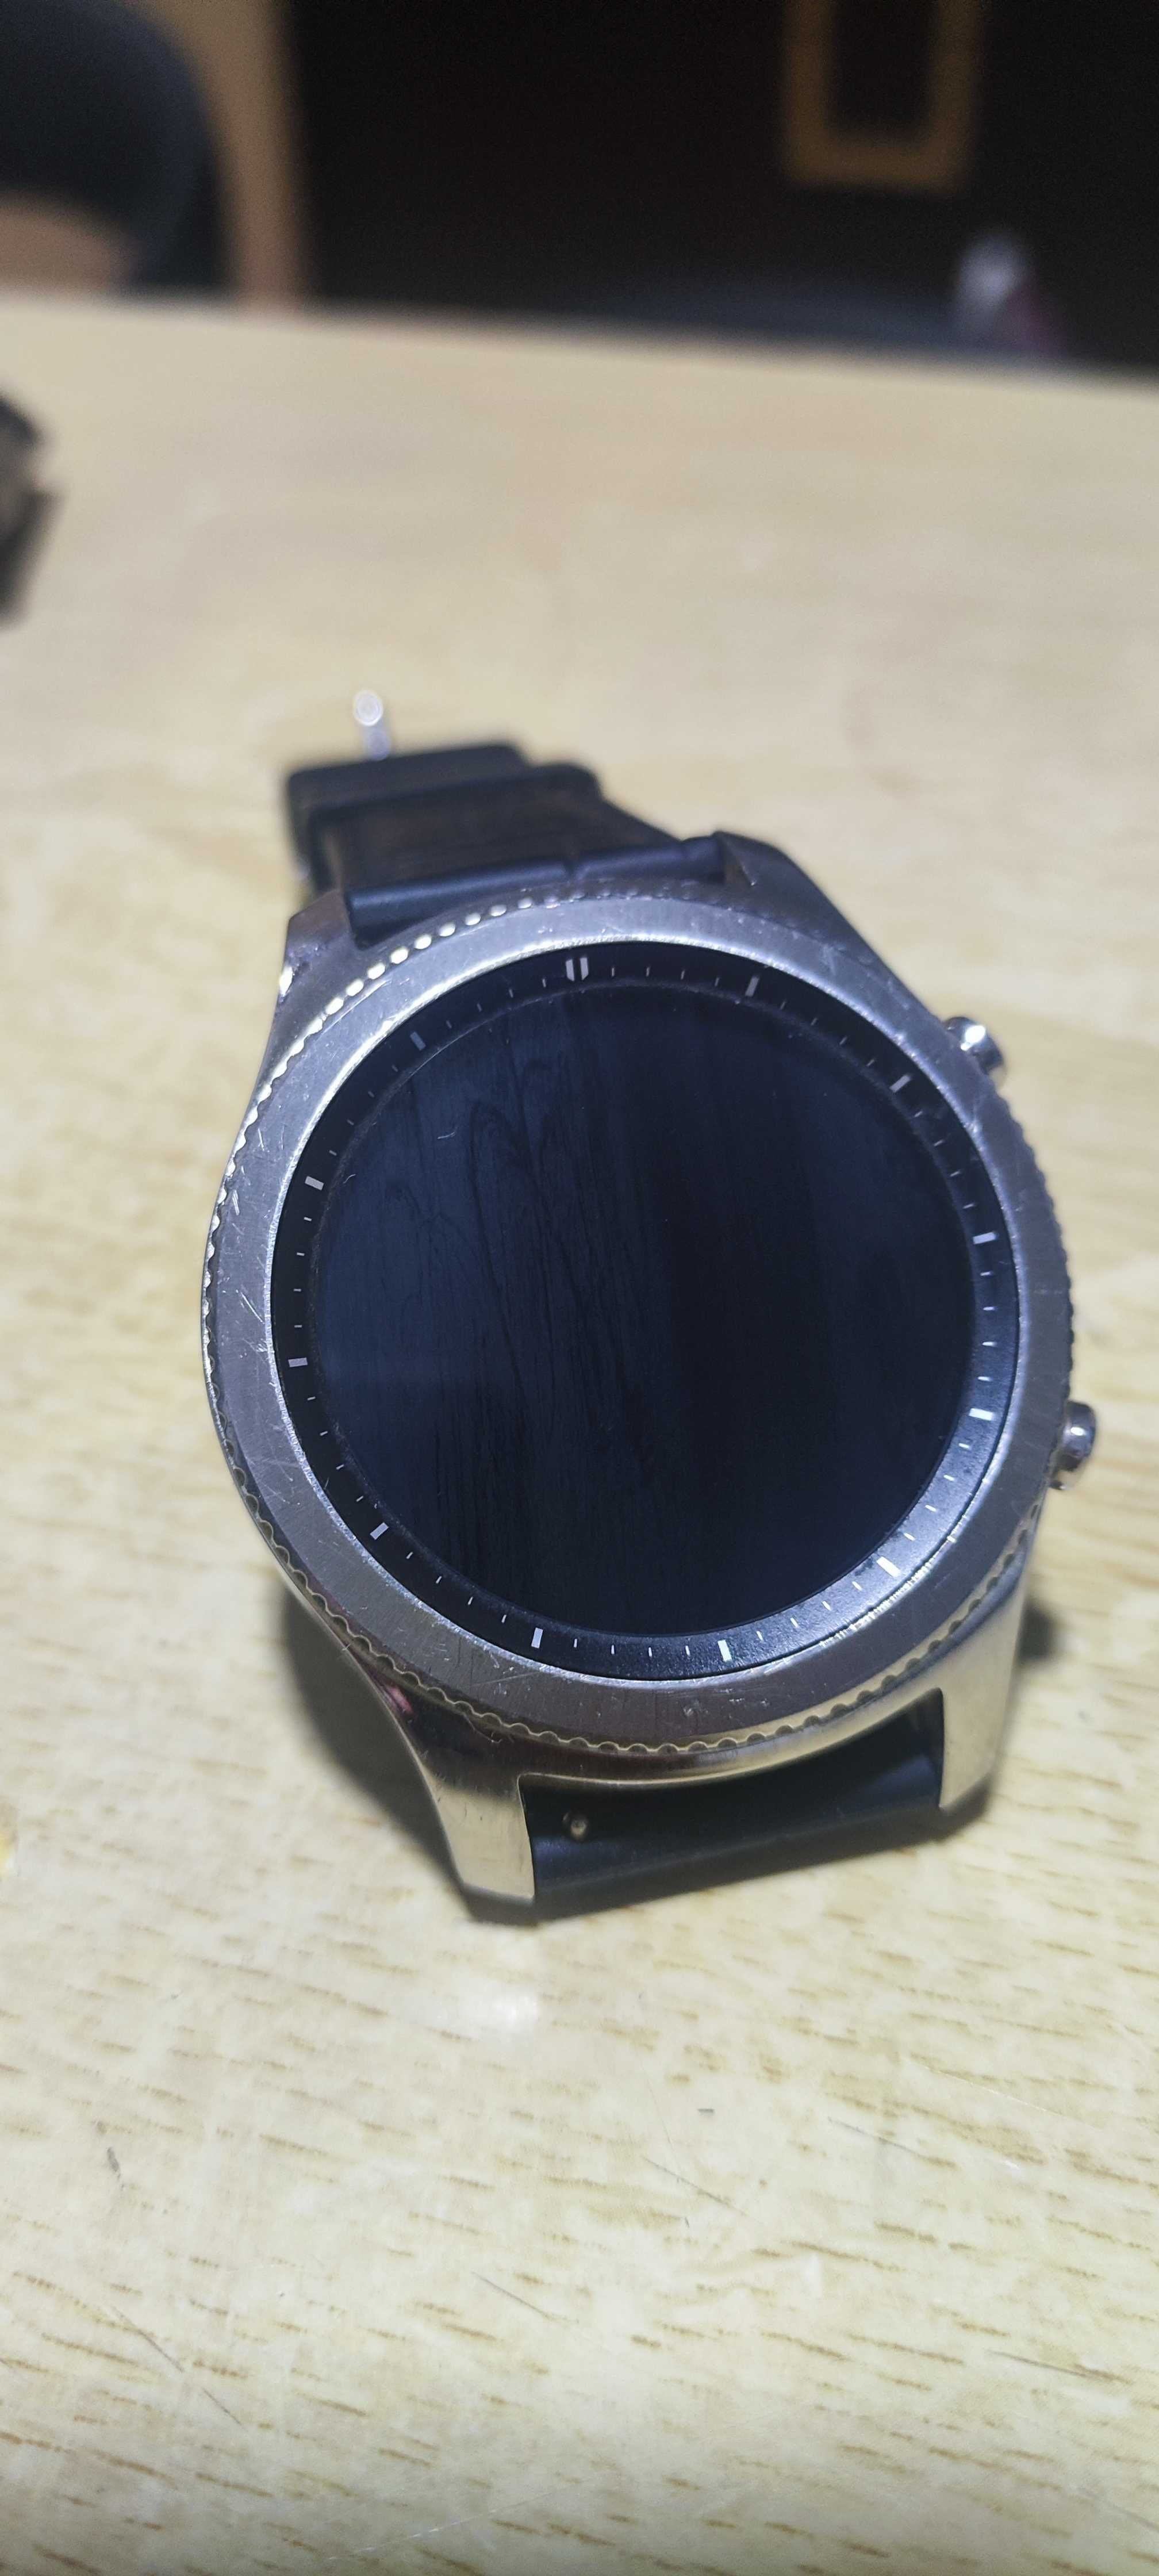 samsung smartwatch gear s3 classic